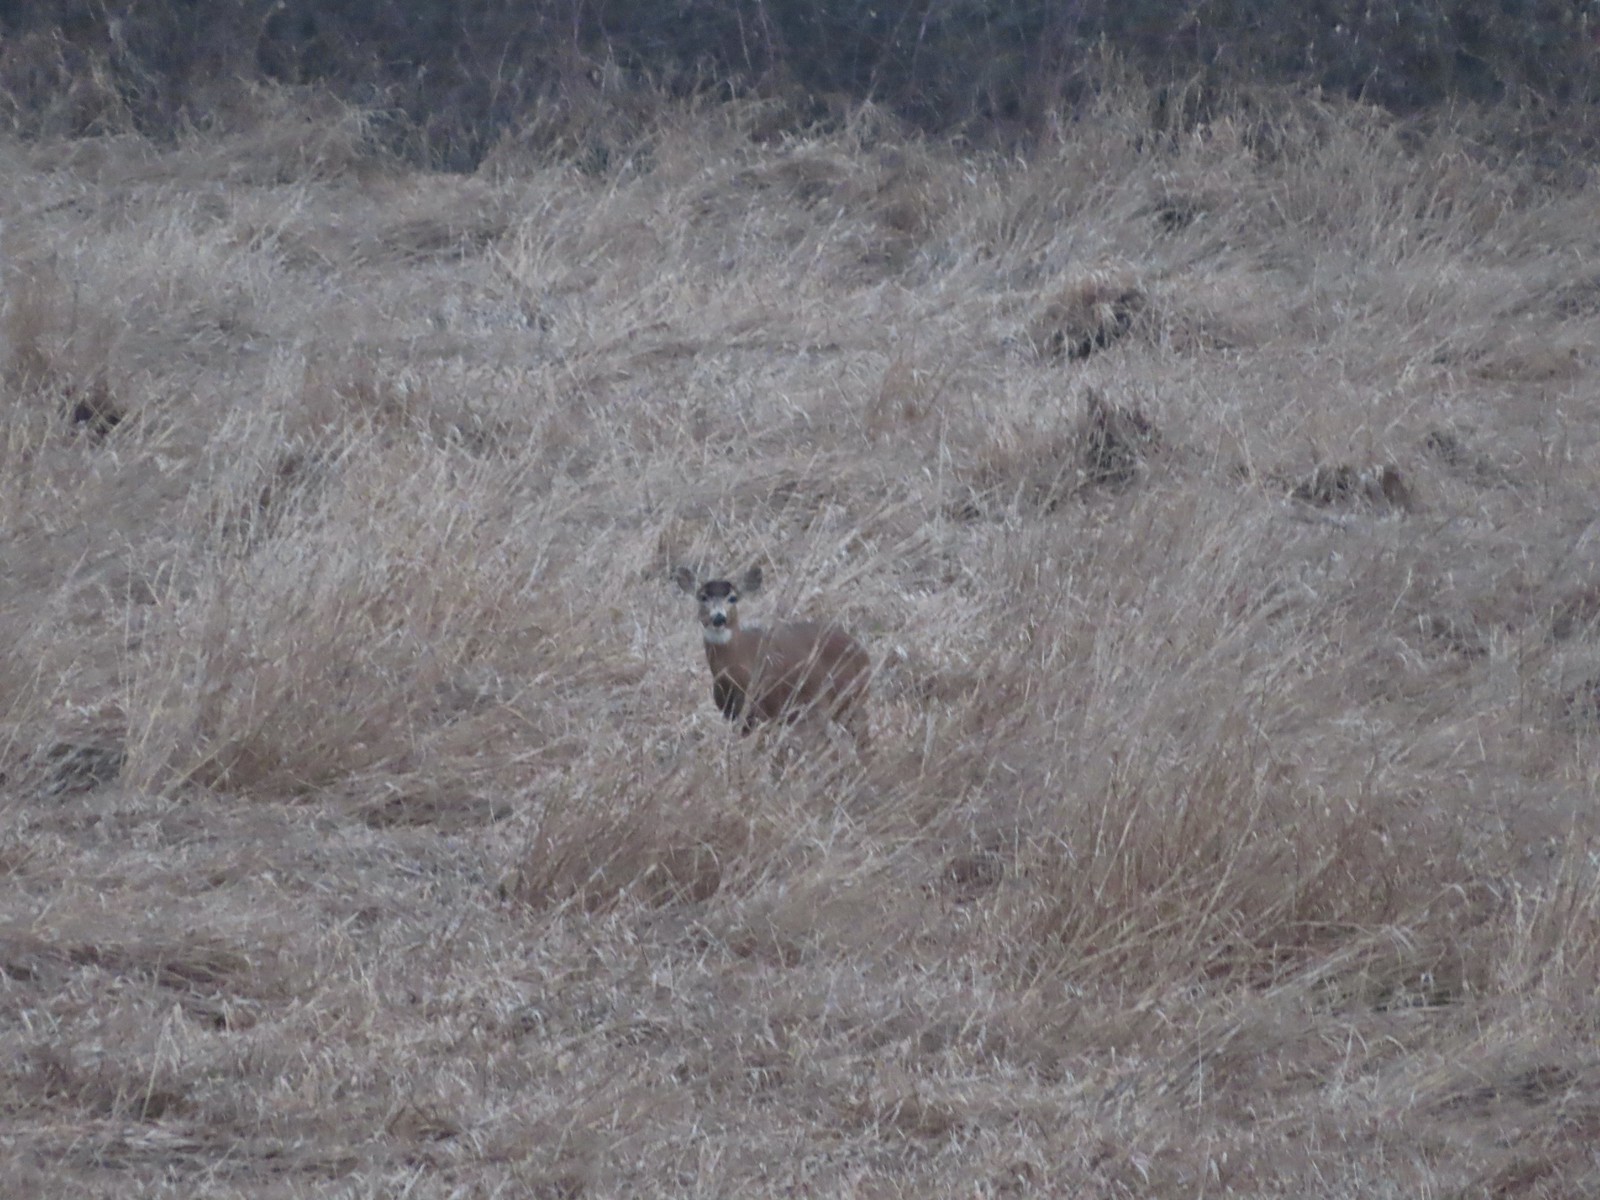 Deer at Minto-Brown Island Park